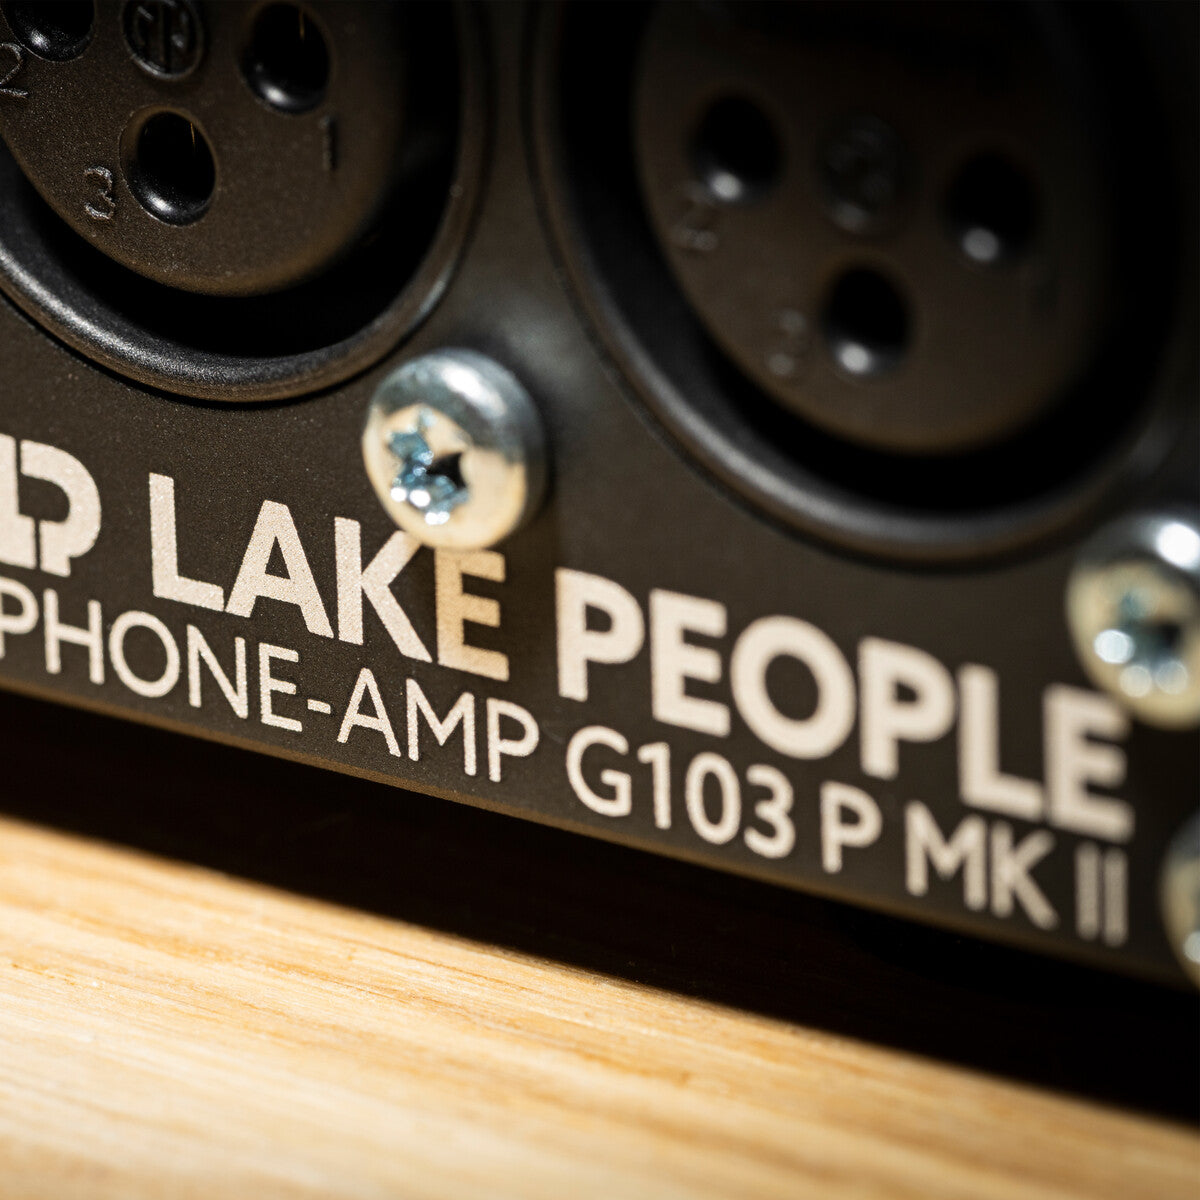 Lake People G103-P MKII